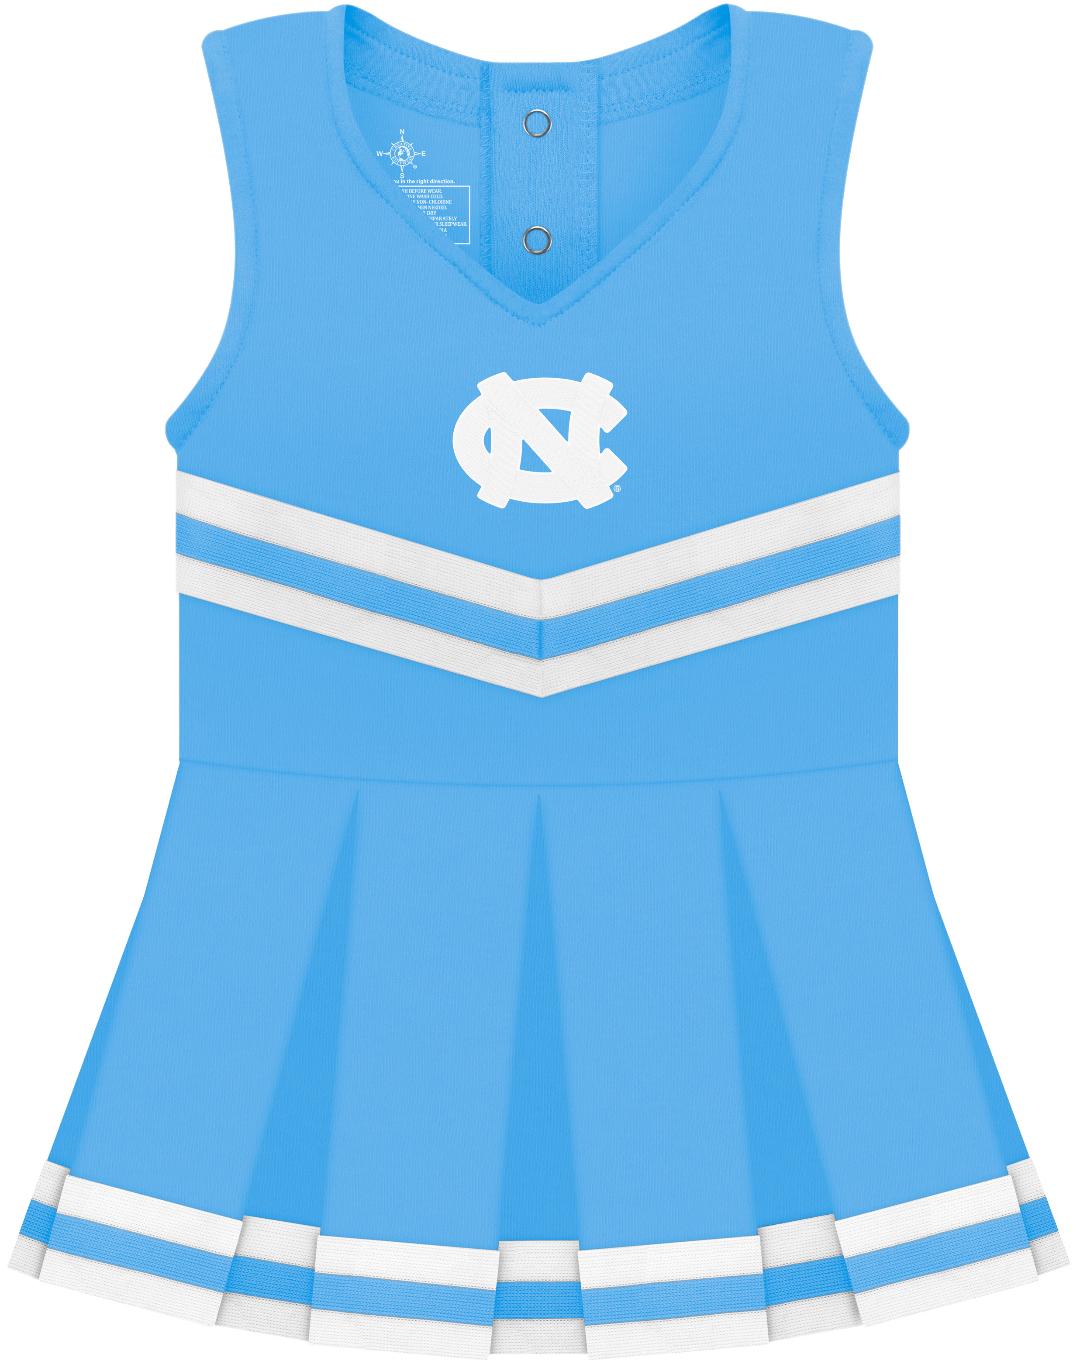 UNC Cheerleader Dress - Youth